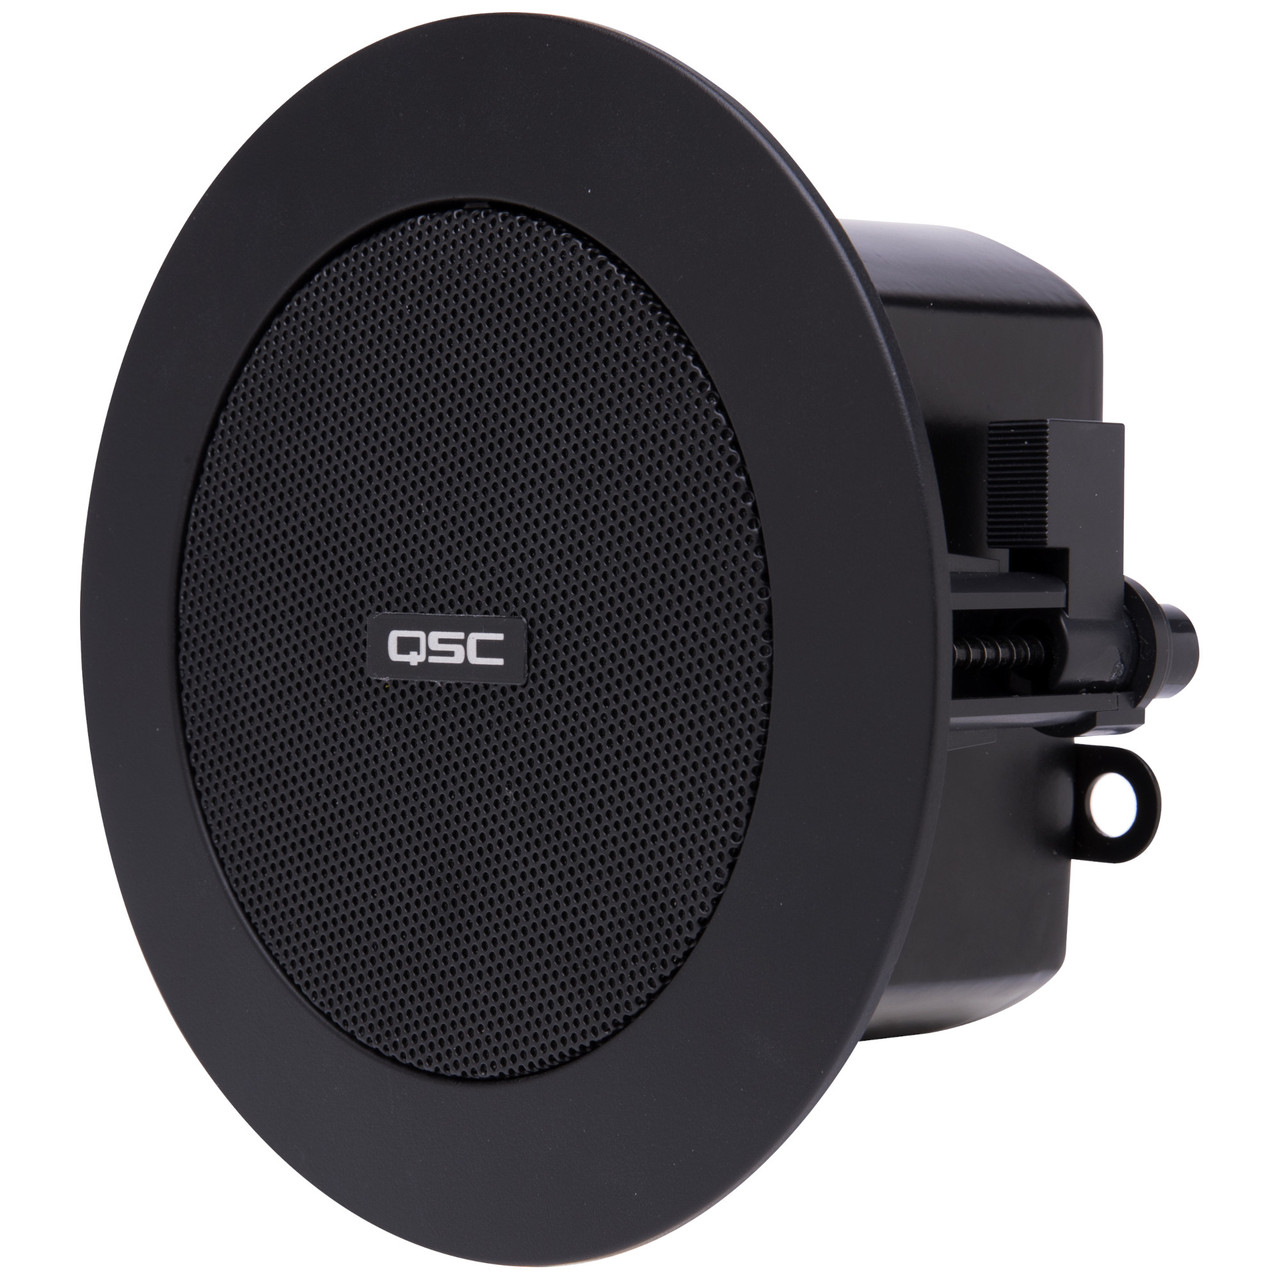 Sony SRS-BTX500 Premium Bluetooth Wireless Speaker review: Classy wireless  speaker excels - CNET